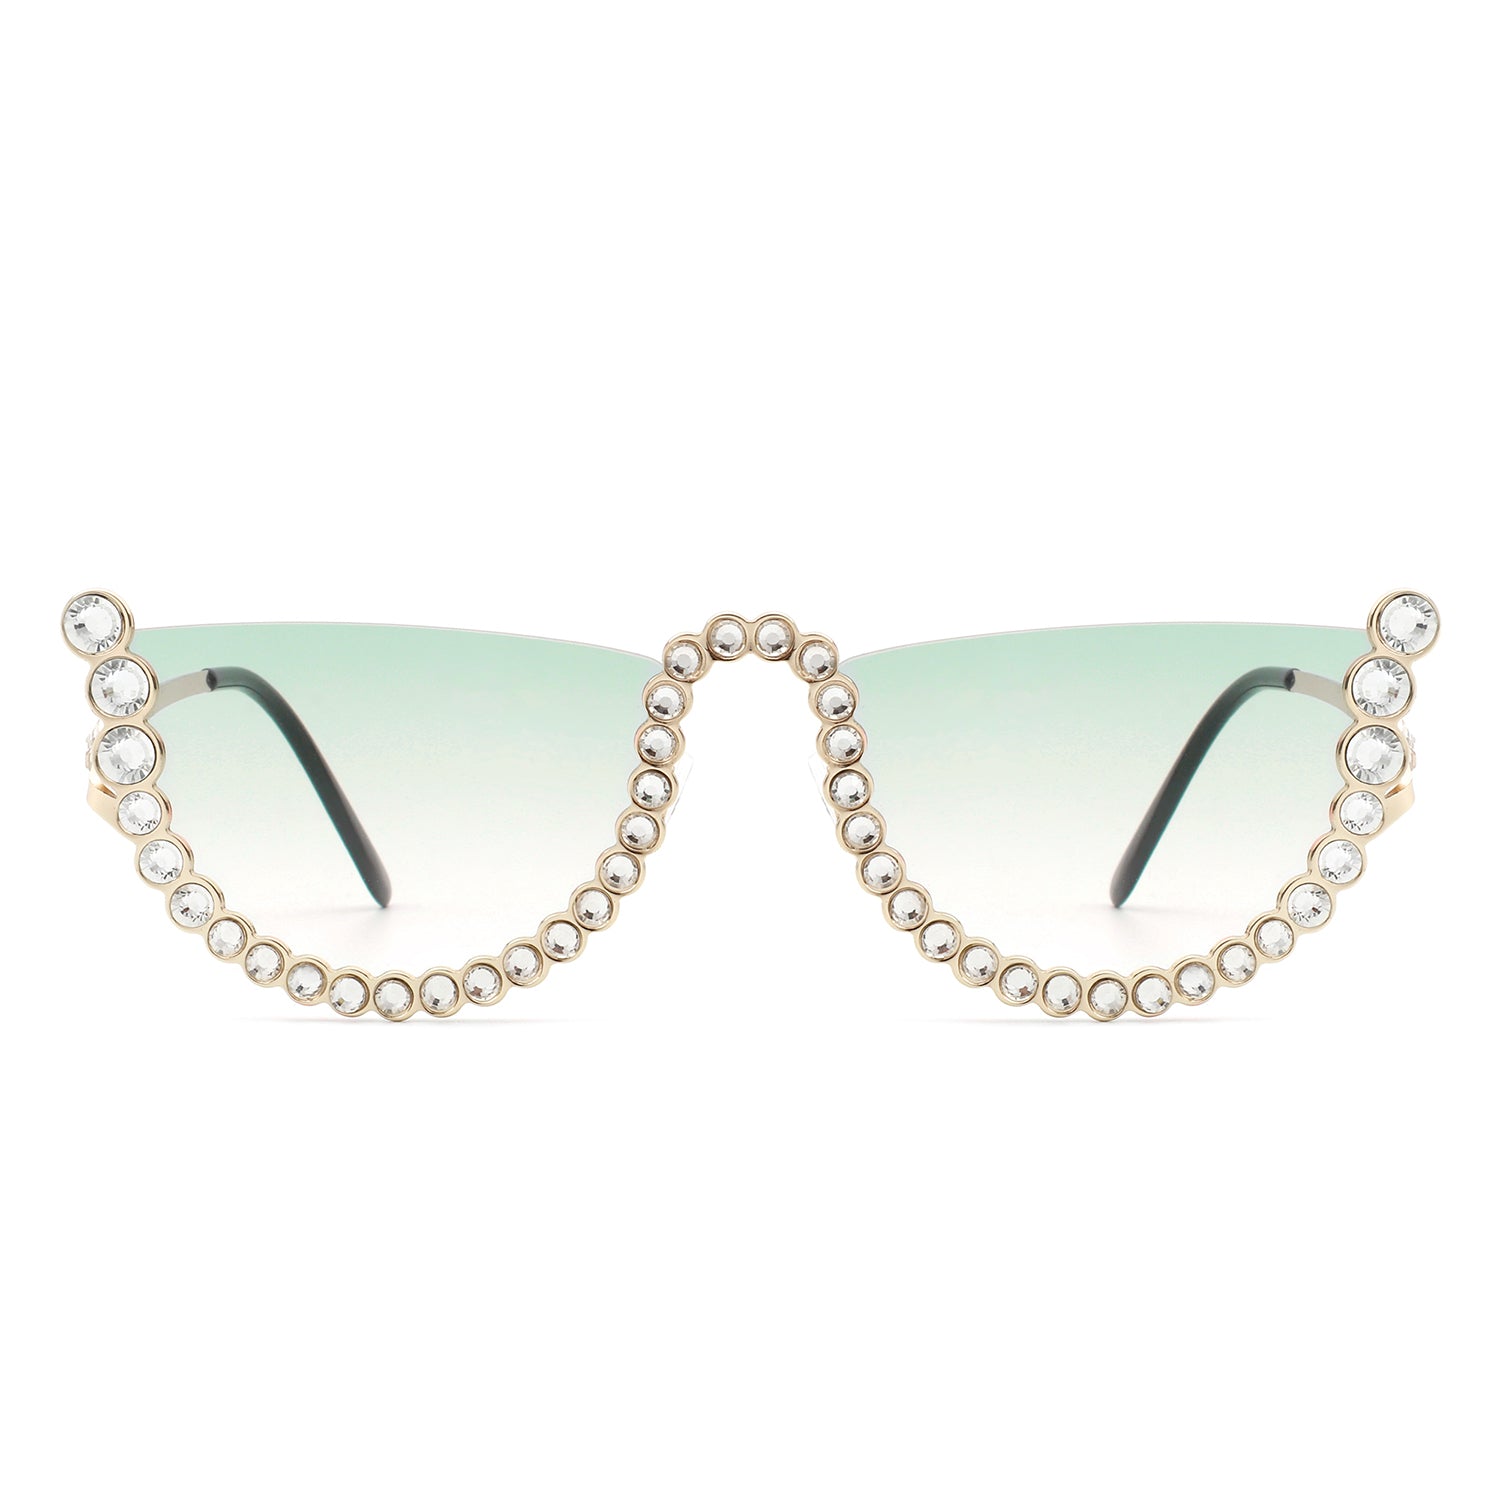 HJ3014 - Women Half Frame Rhinestone Round Fashion Sunglasses